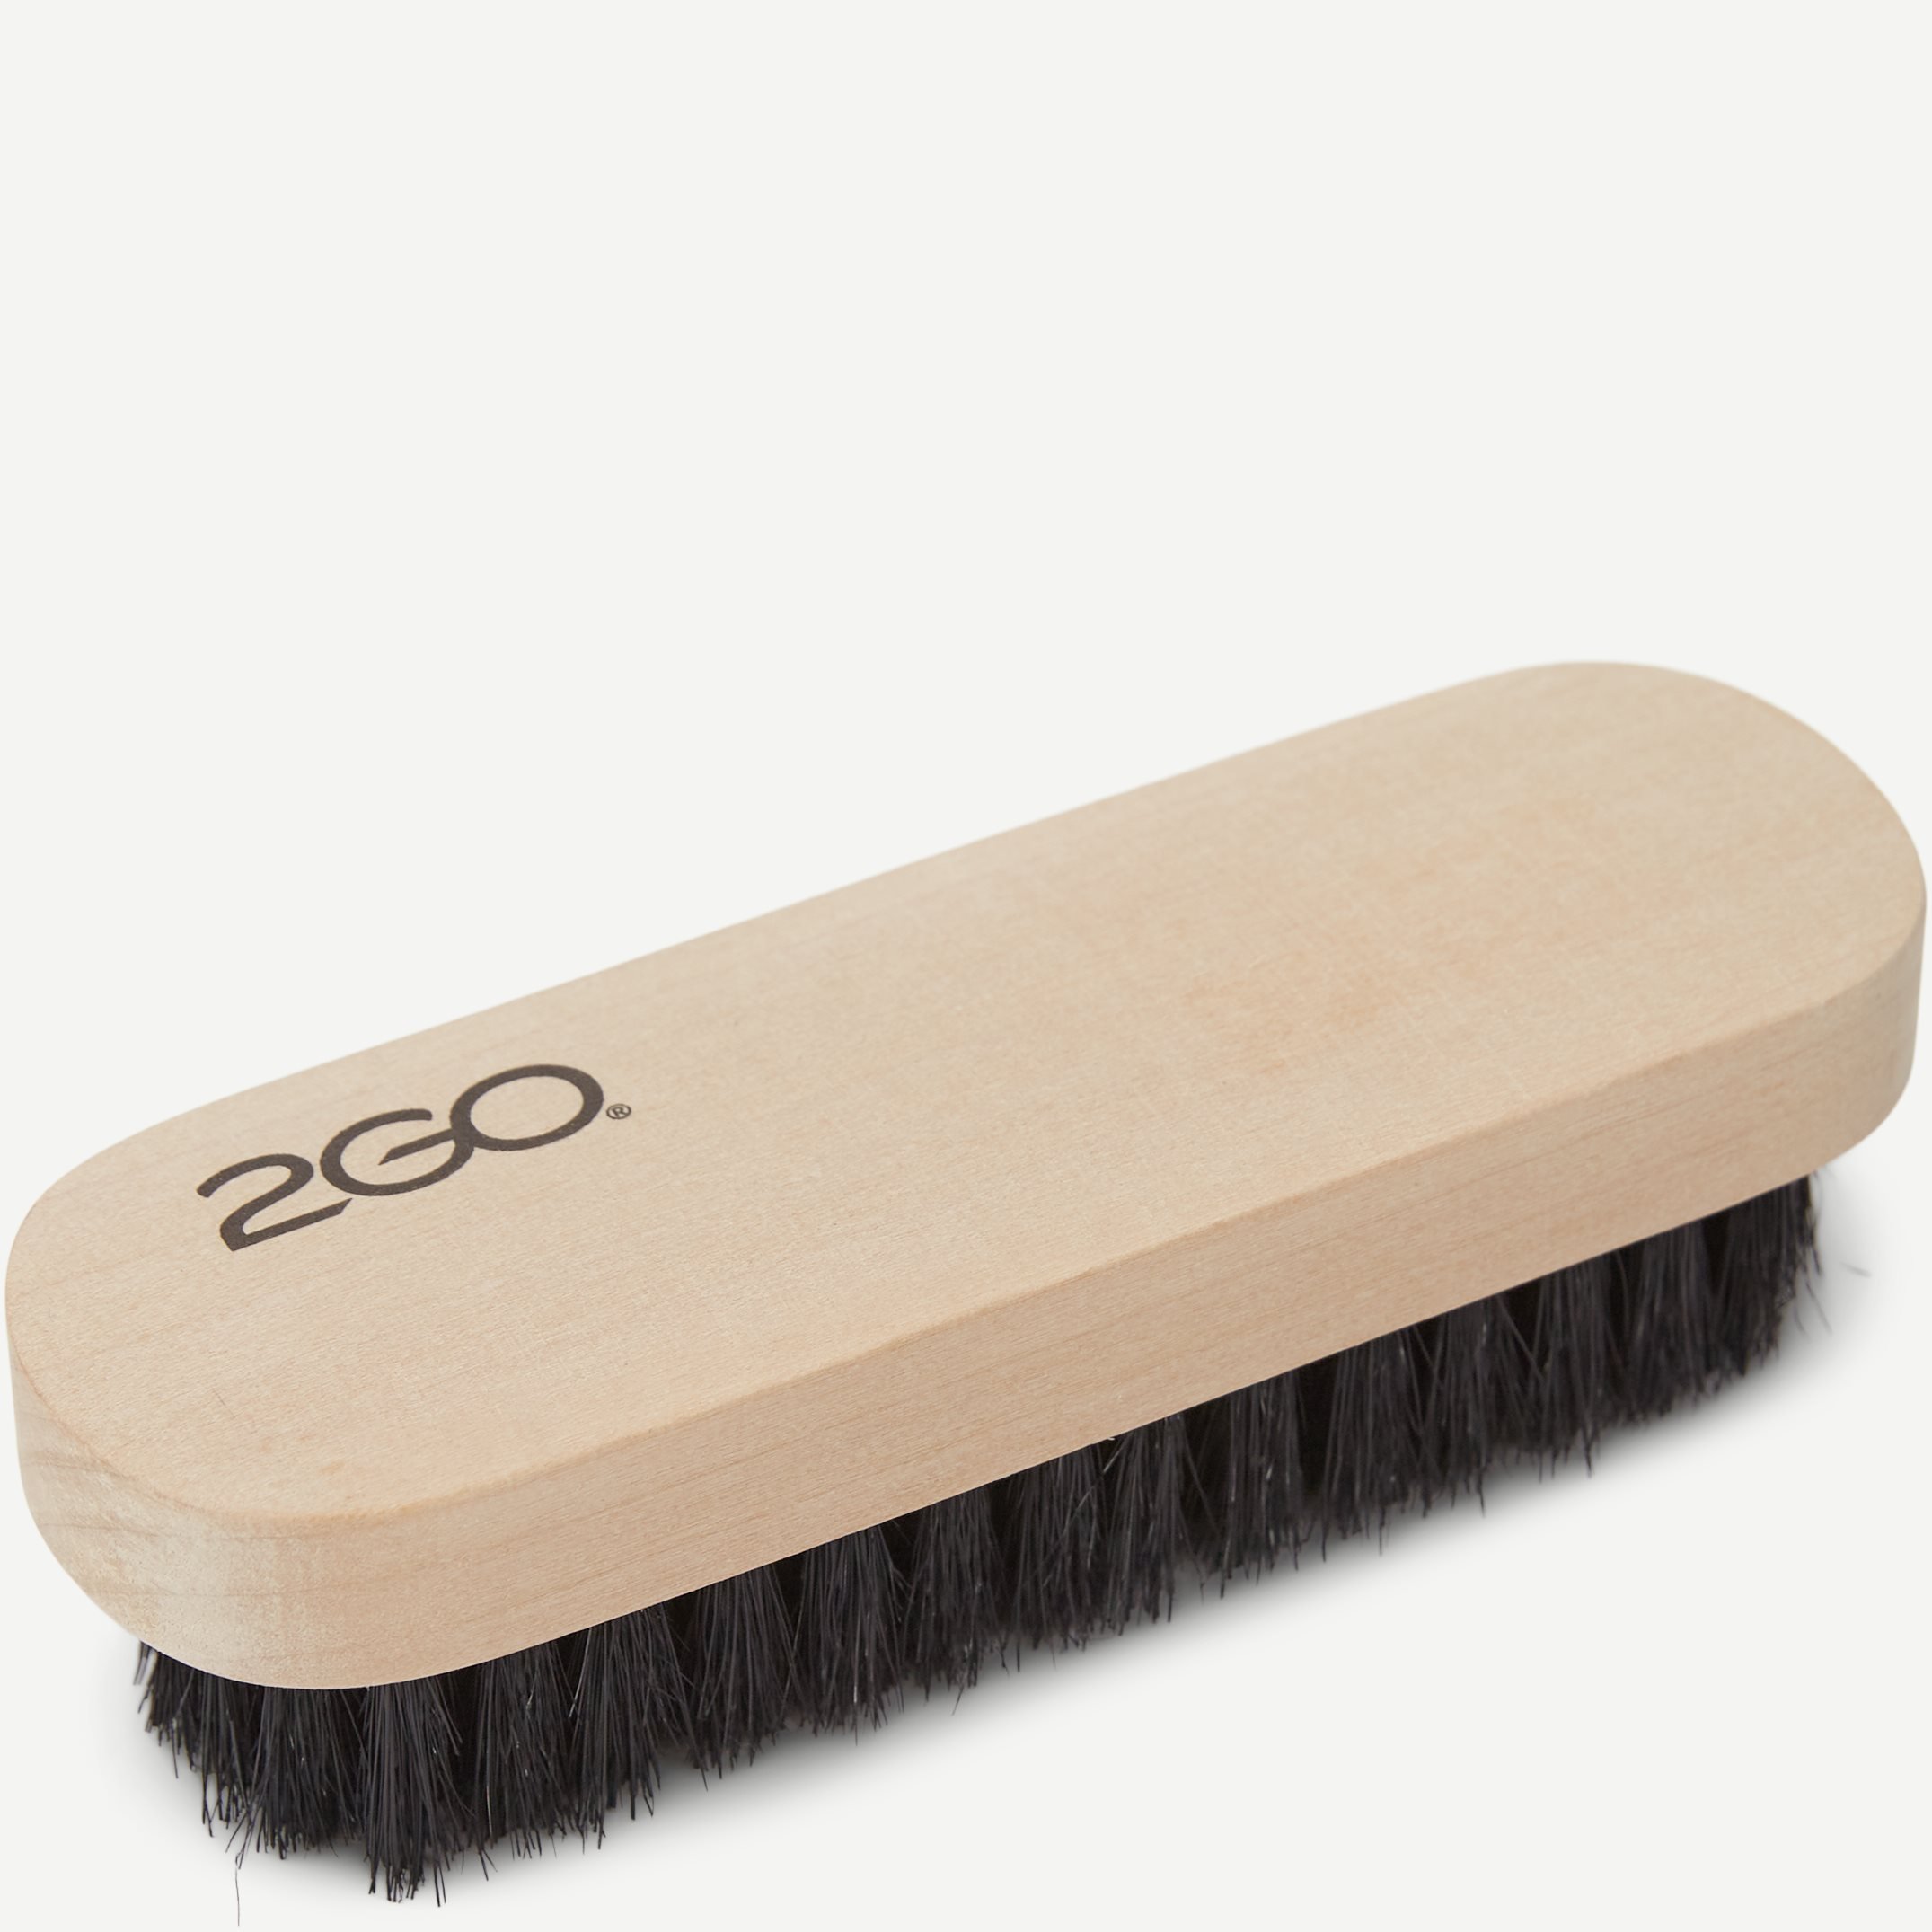 2GO Shoe Brush Small - Accessories - Hvid